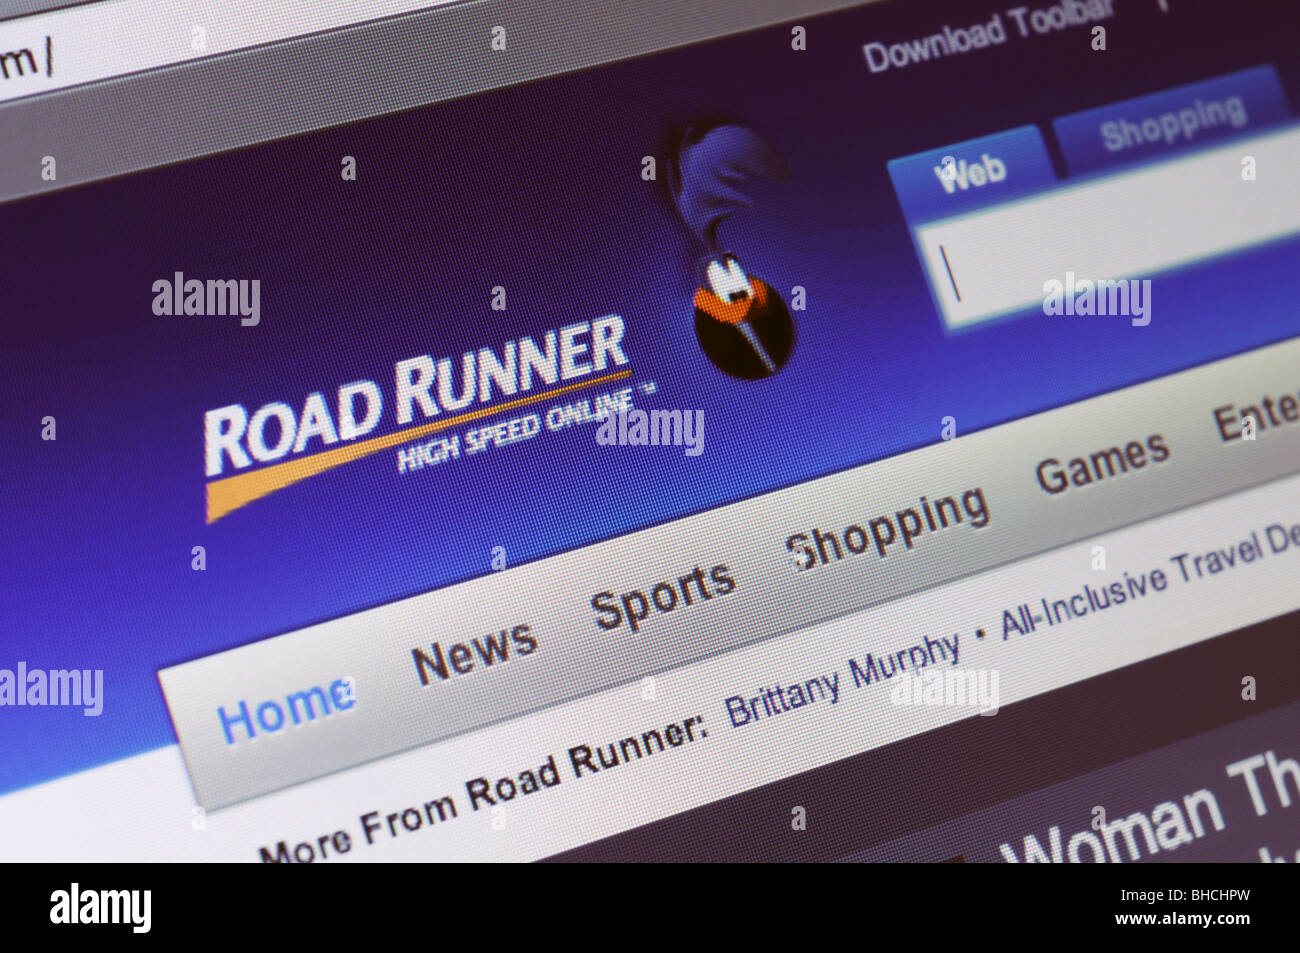 RoadRunner-Internet und Kabel-TV-Anbieter-website Stockfotografie - Alamy